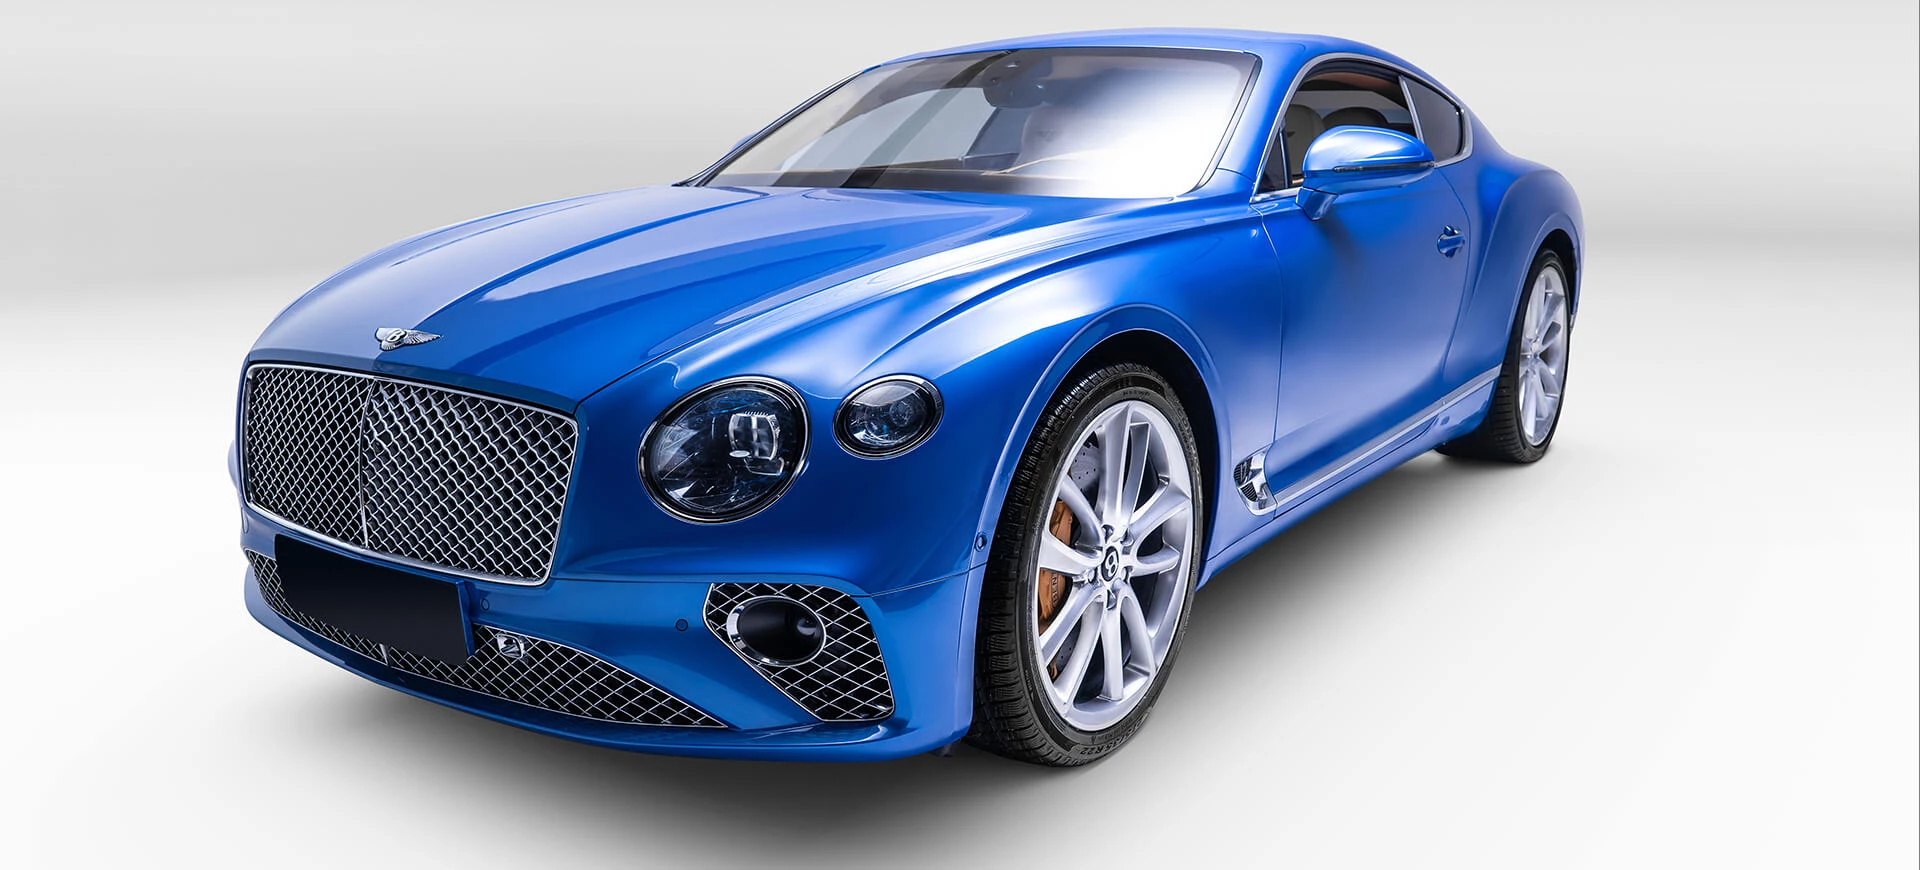 Bentley Continental GT Blau